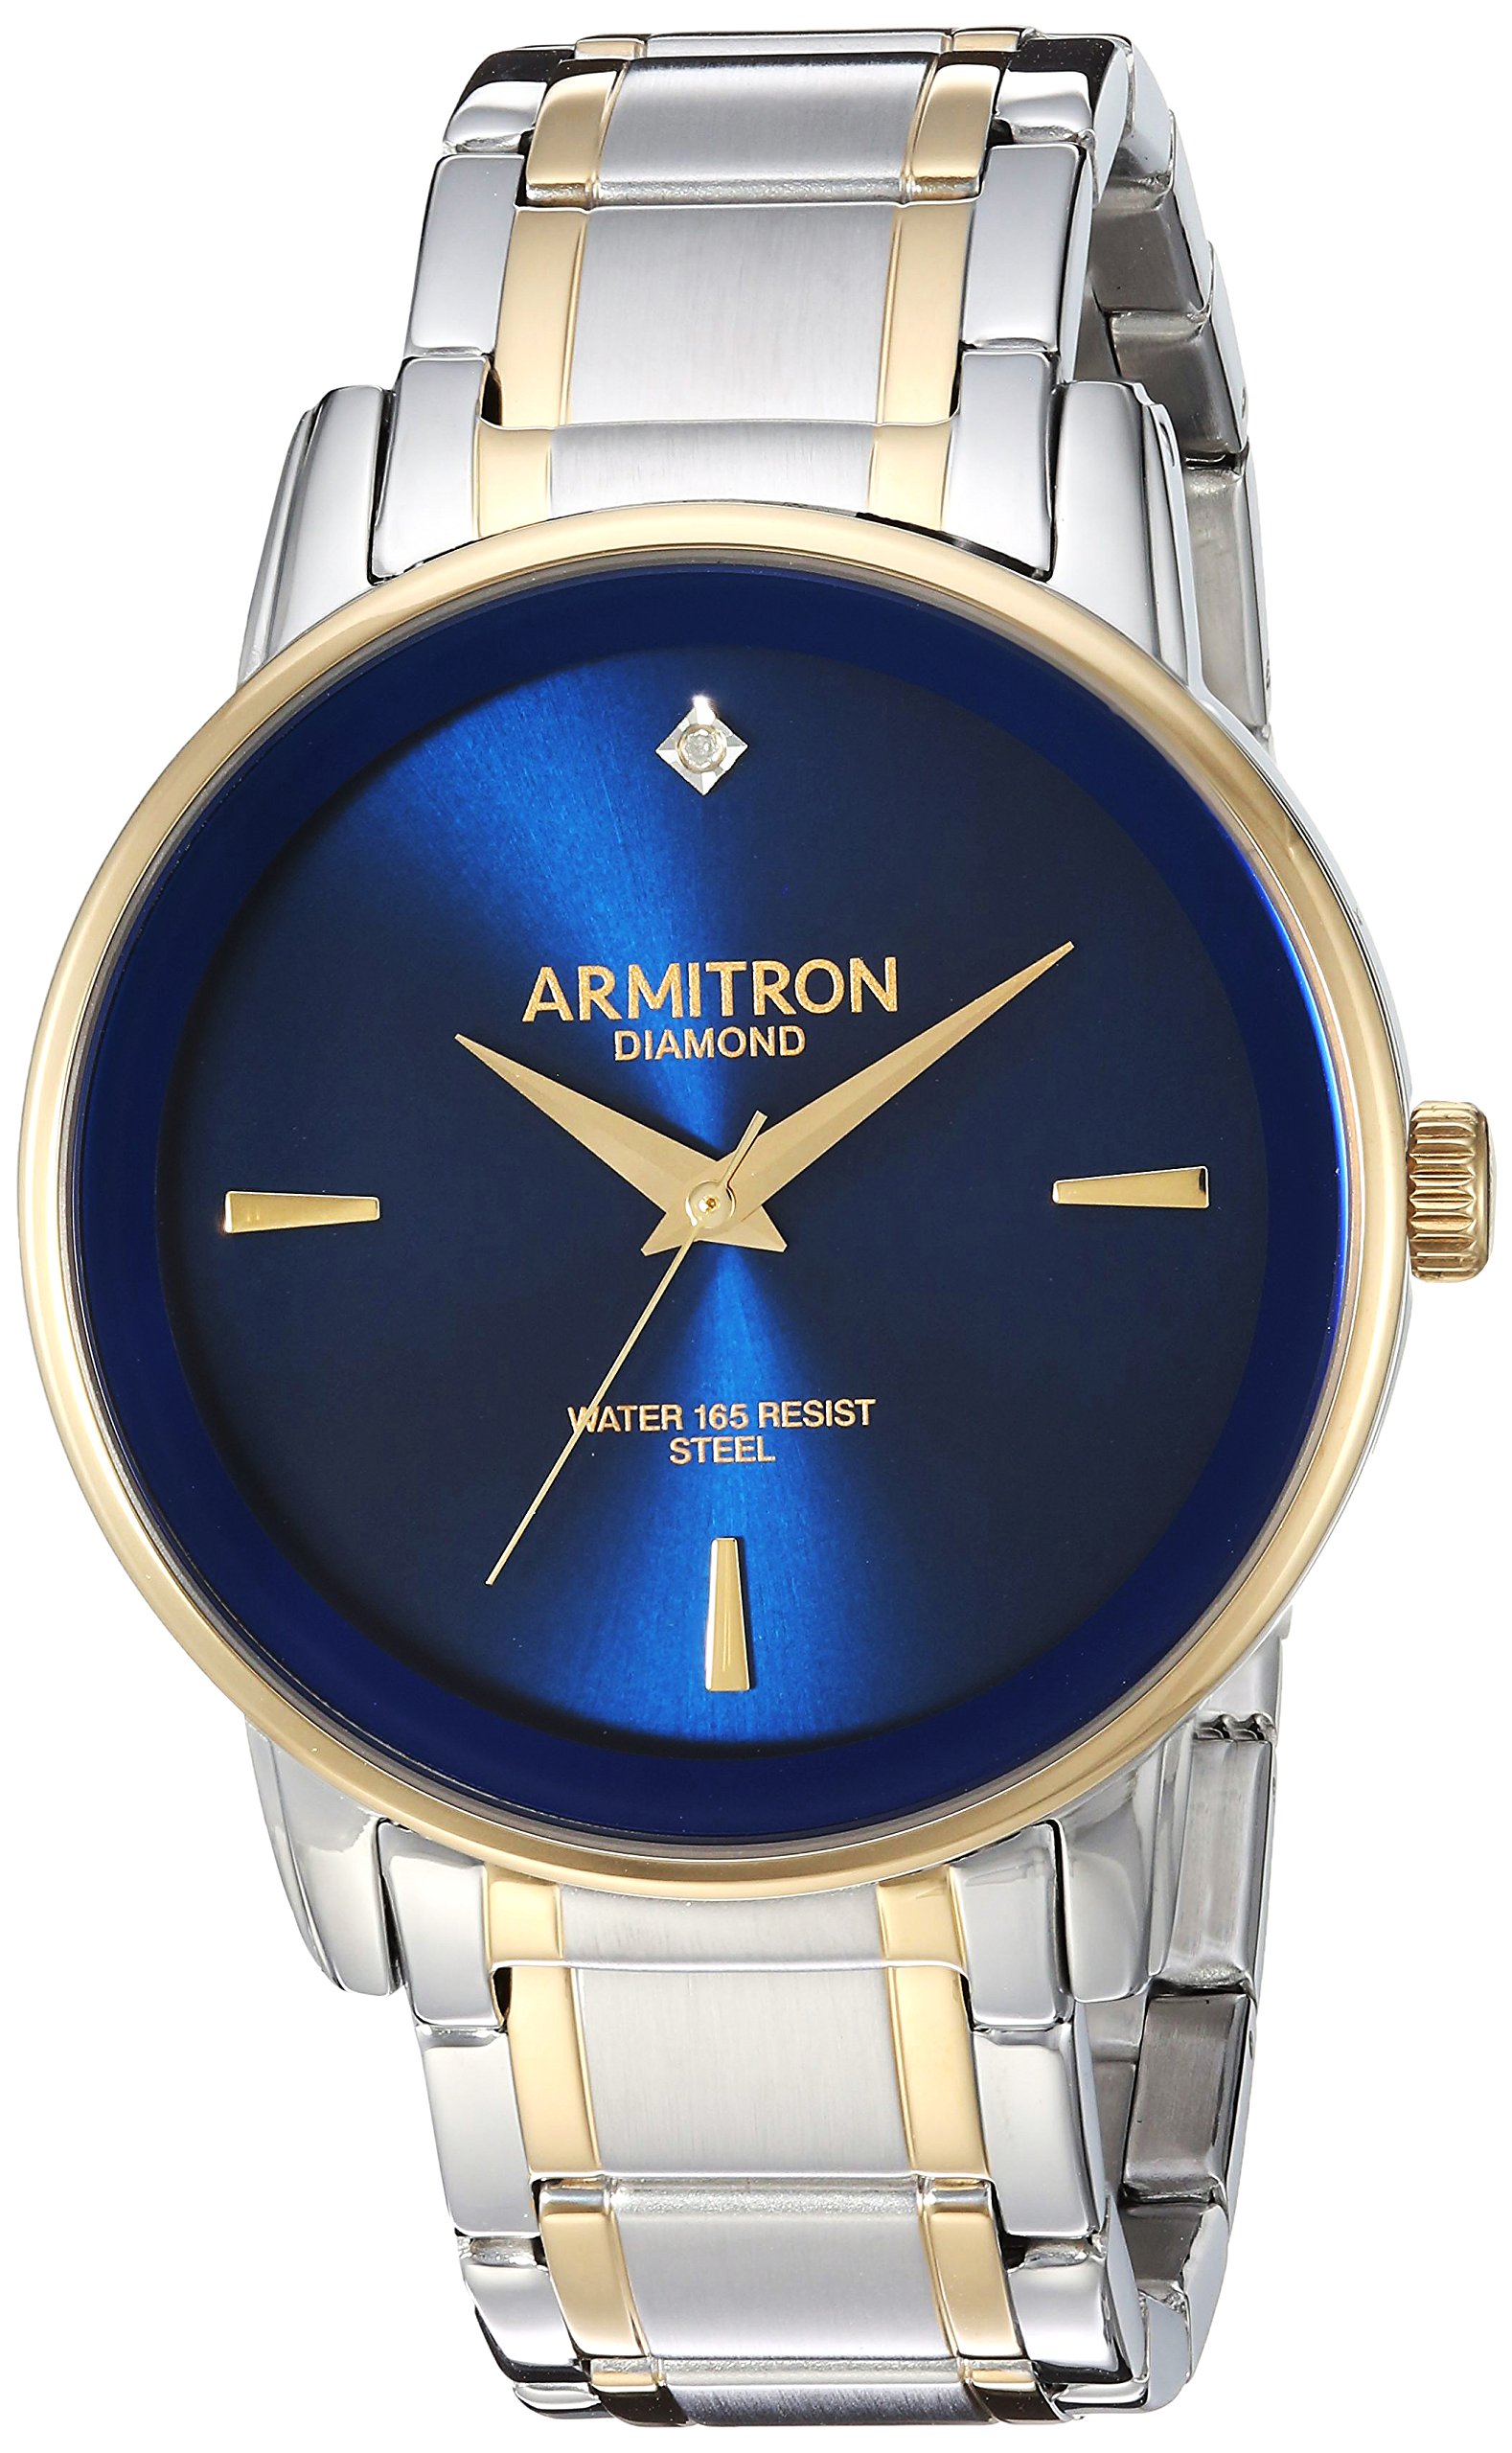 Armitron Men's Diamond-Accented Bracelet Watch